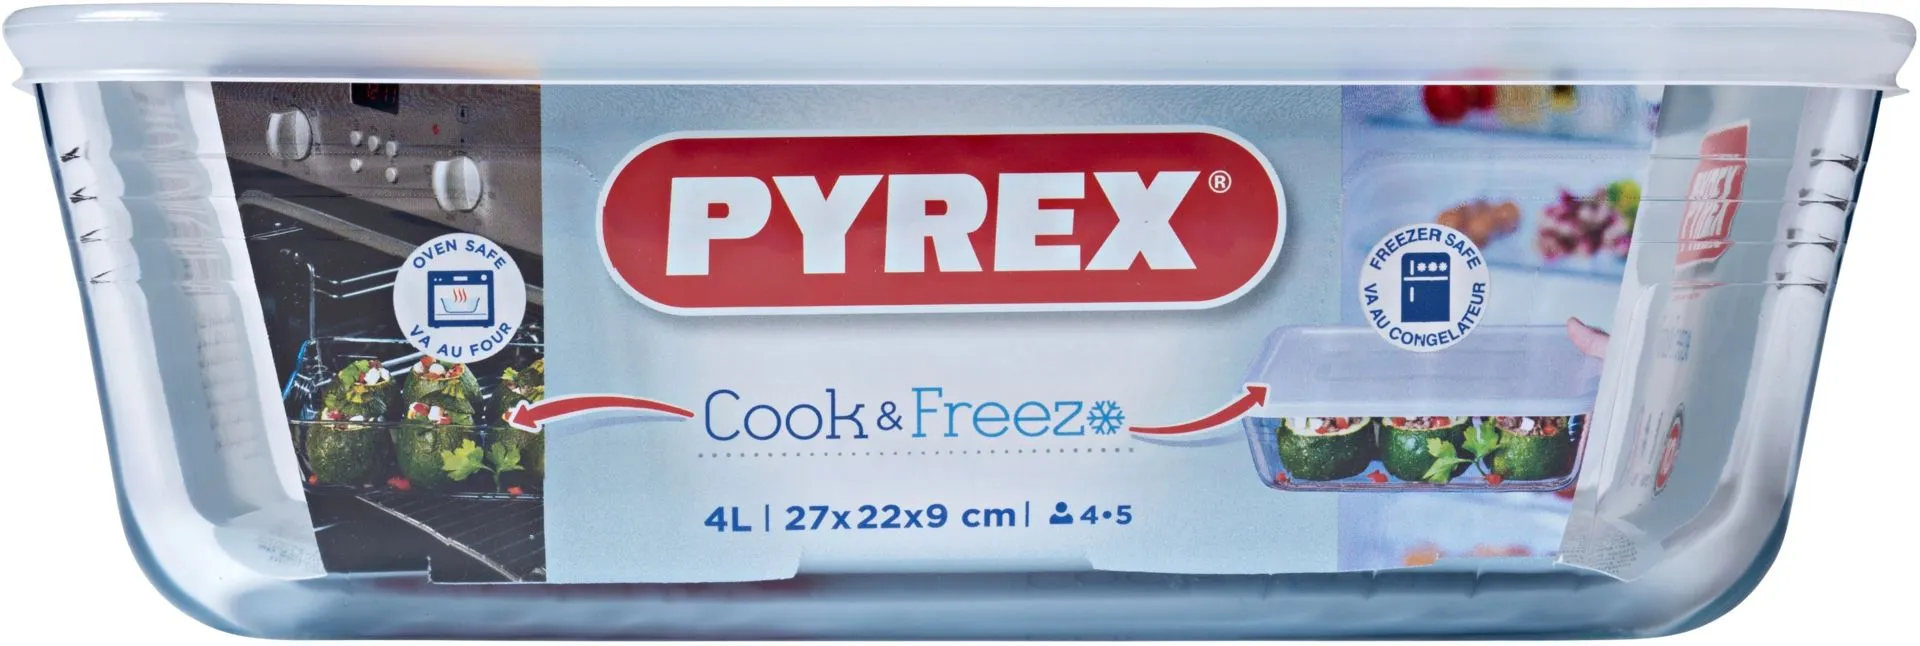 Pyrex Cook & Freeze kannellinen lasivuoka 27x22cm - 2